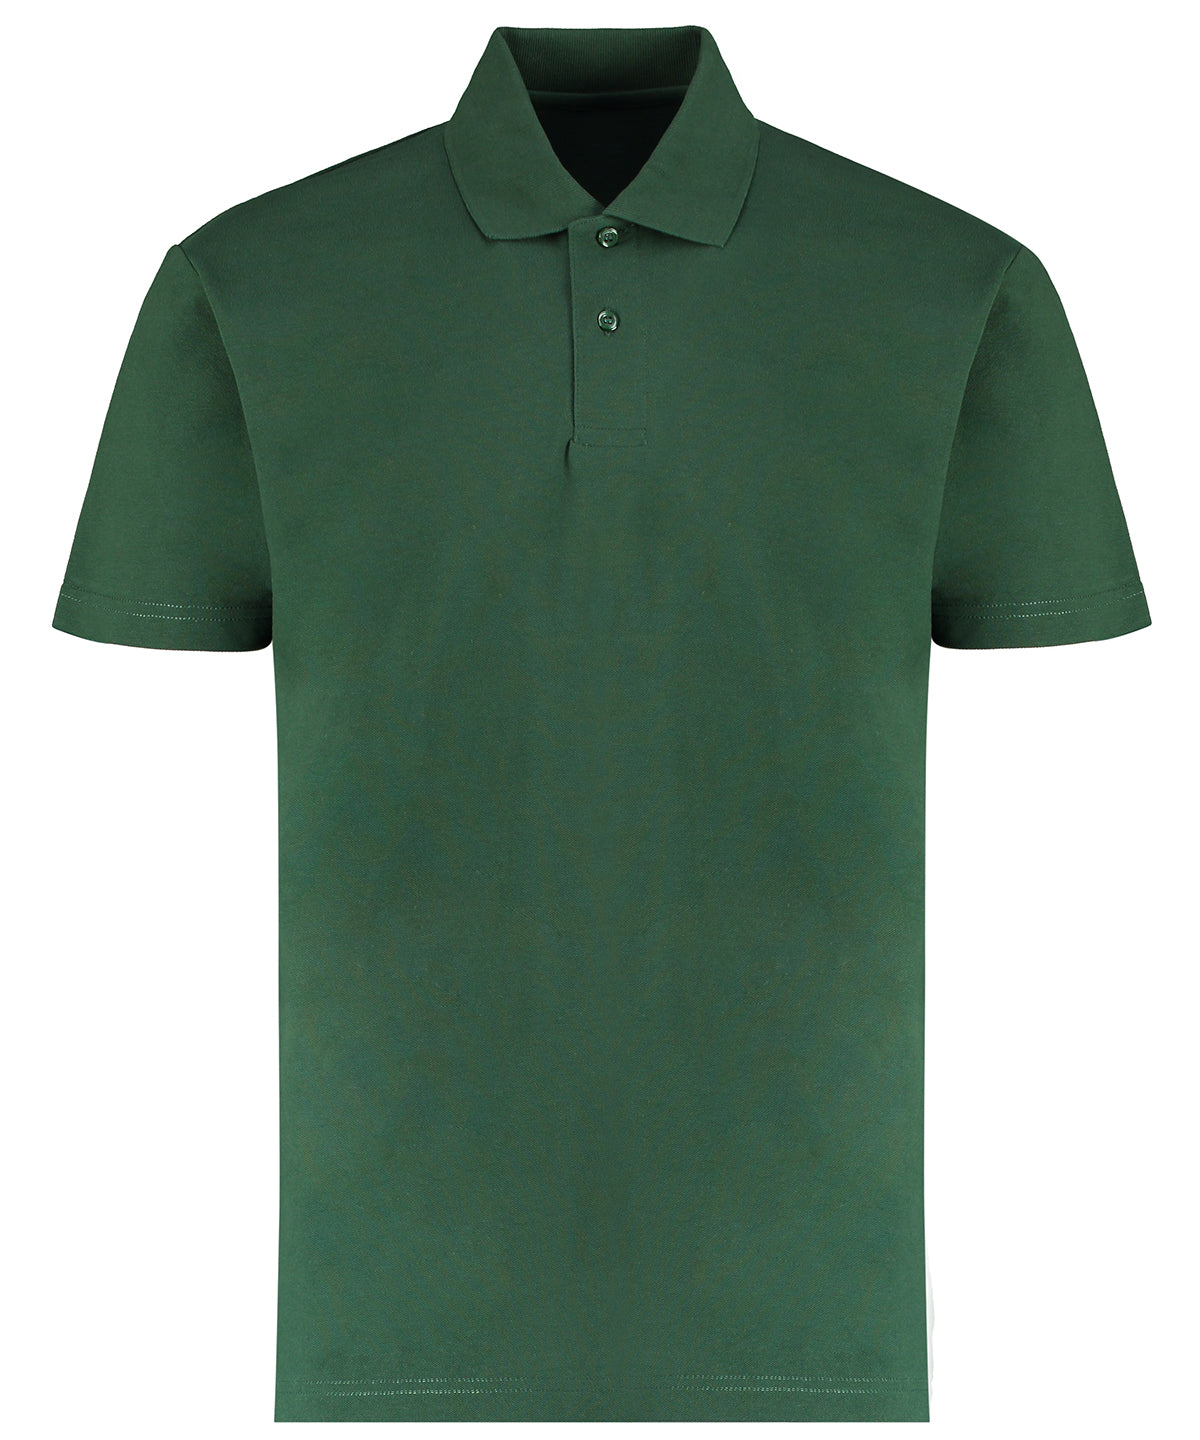 Personalised Polo Shirts - Black Kustom Kit Workforce polo (regular fit)